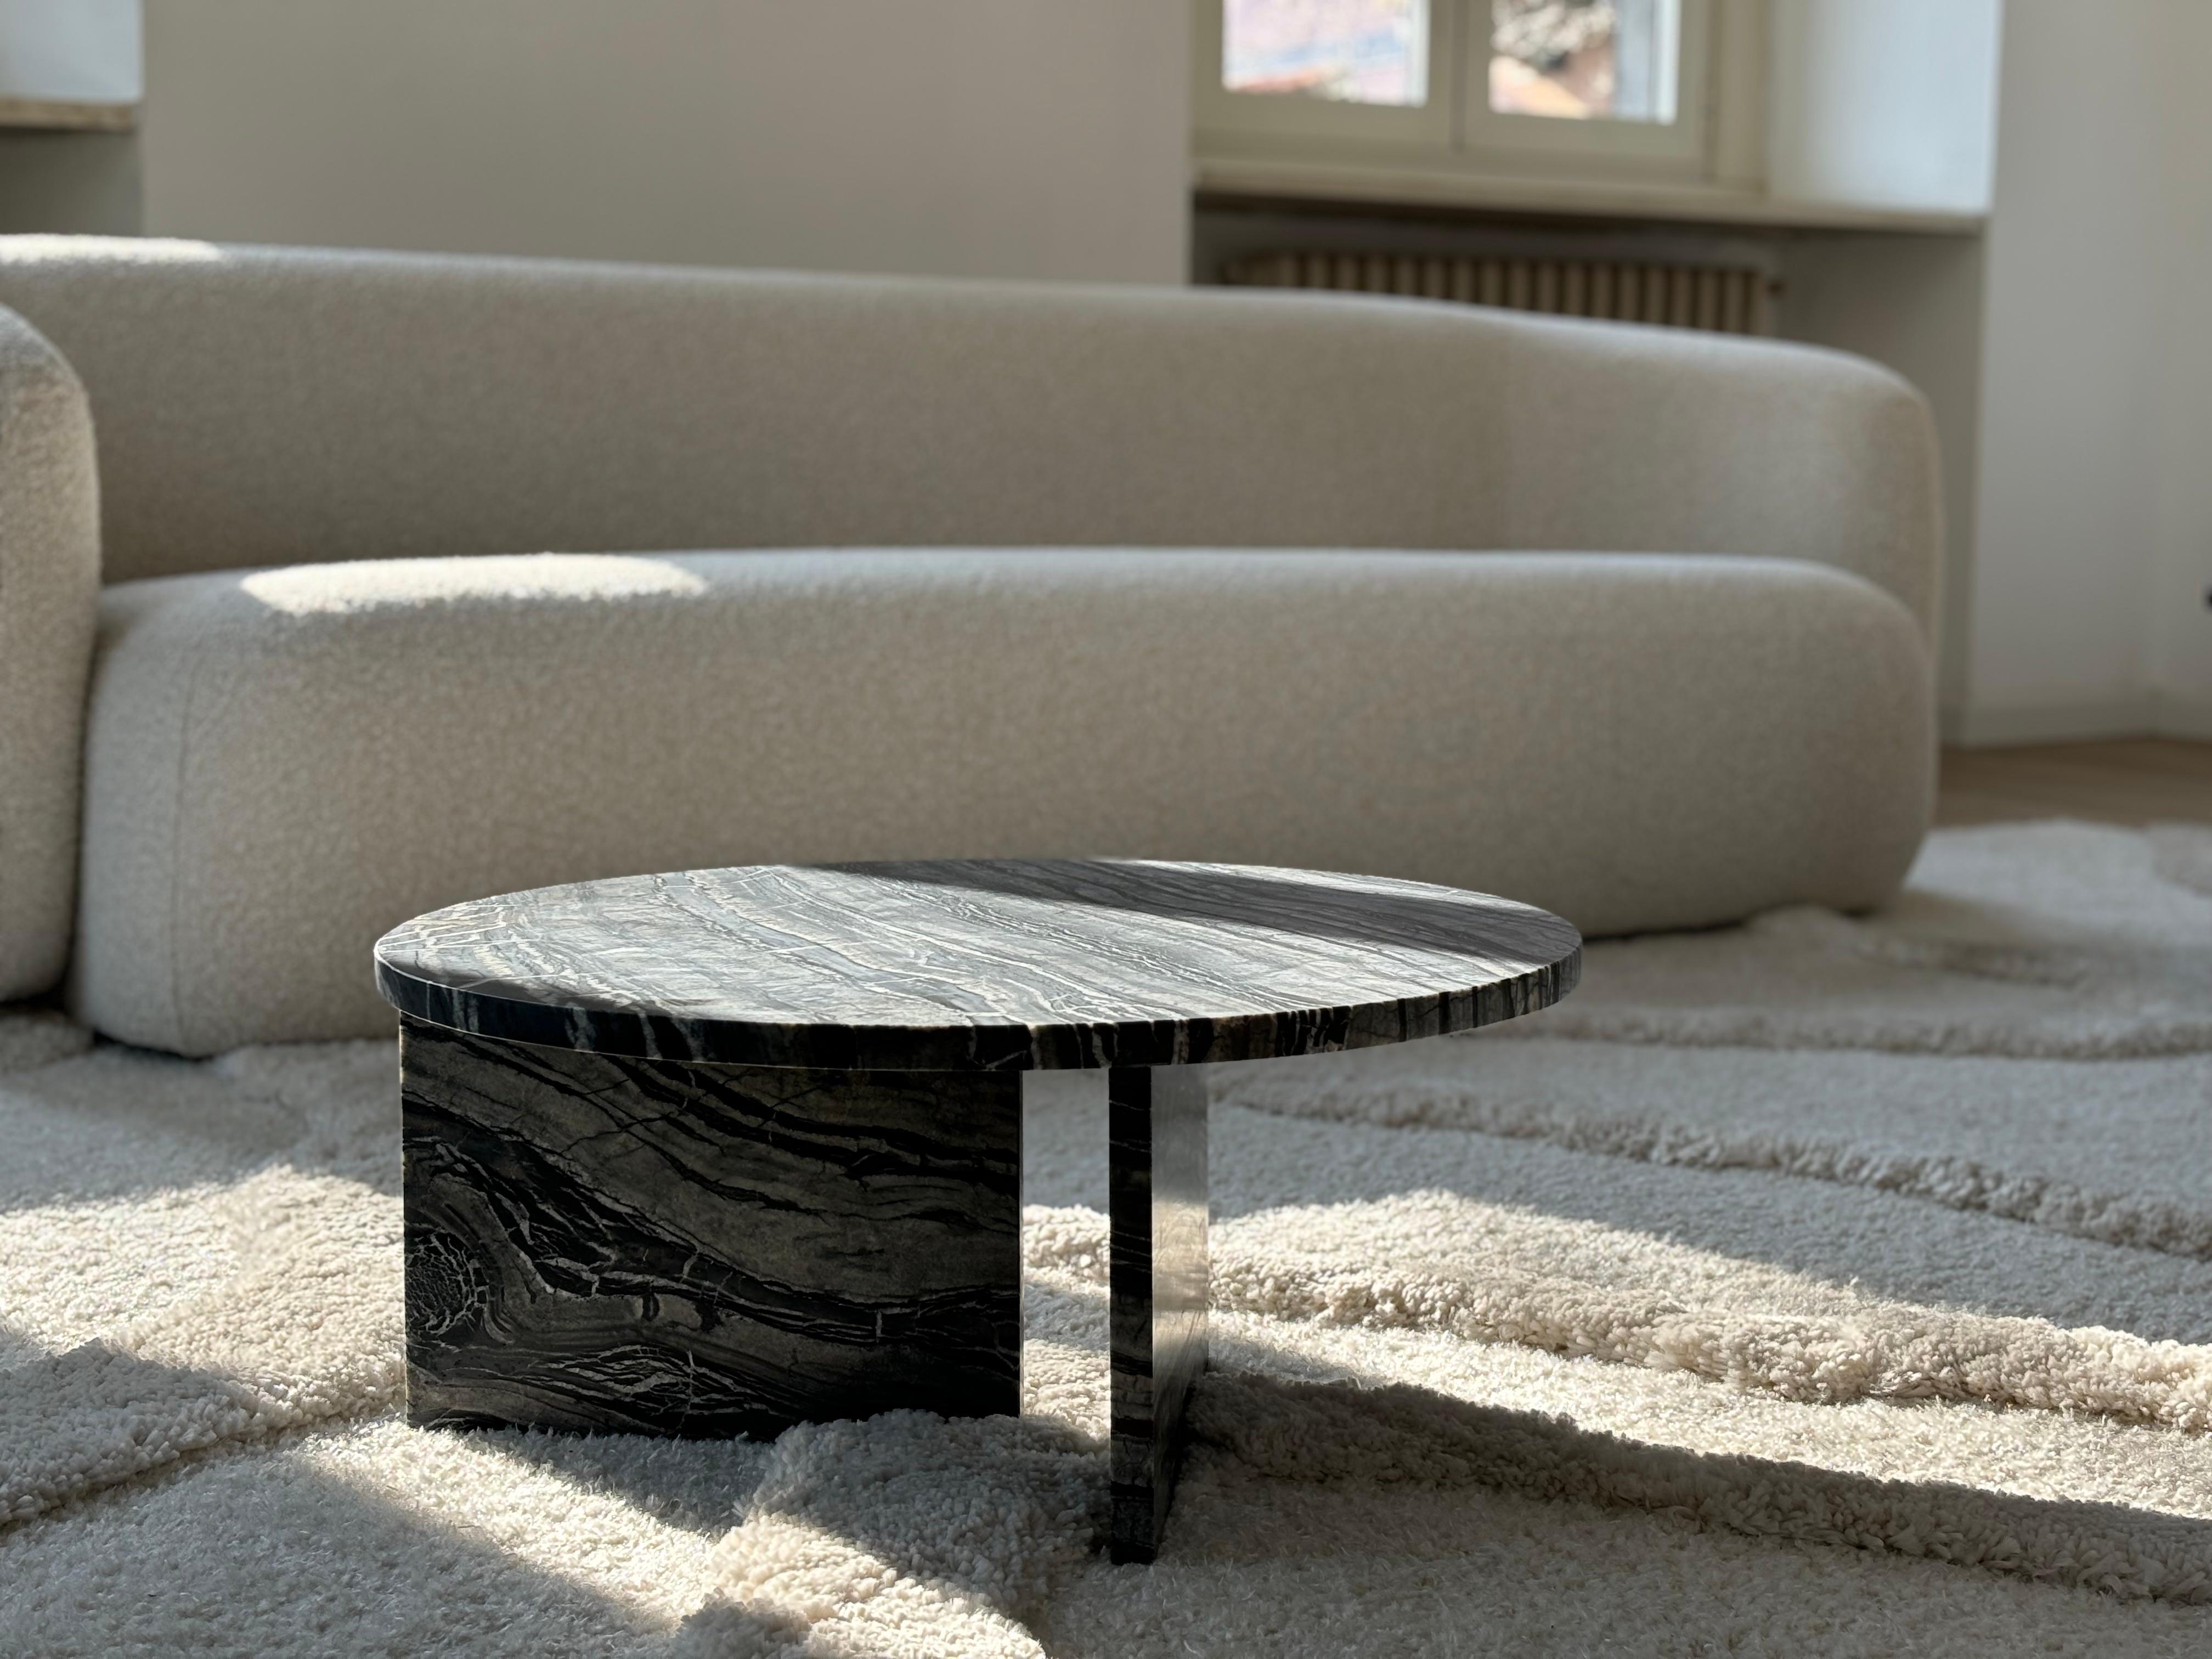 Marbre Table basse ronde en marbre noir du Kenya, fabriquée en Italie en vente